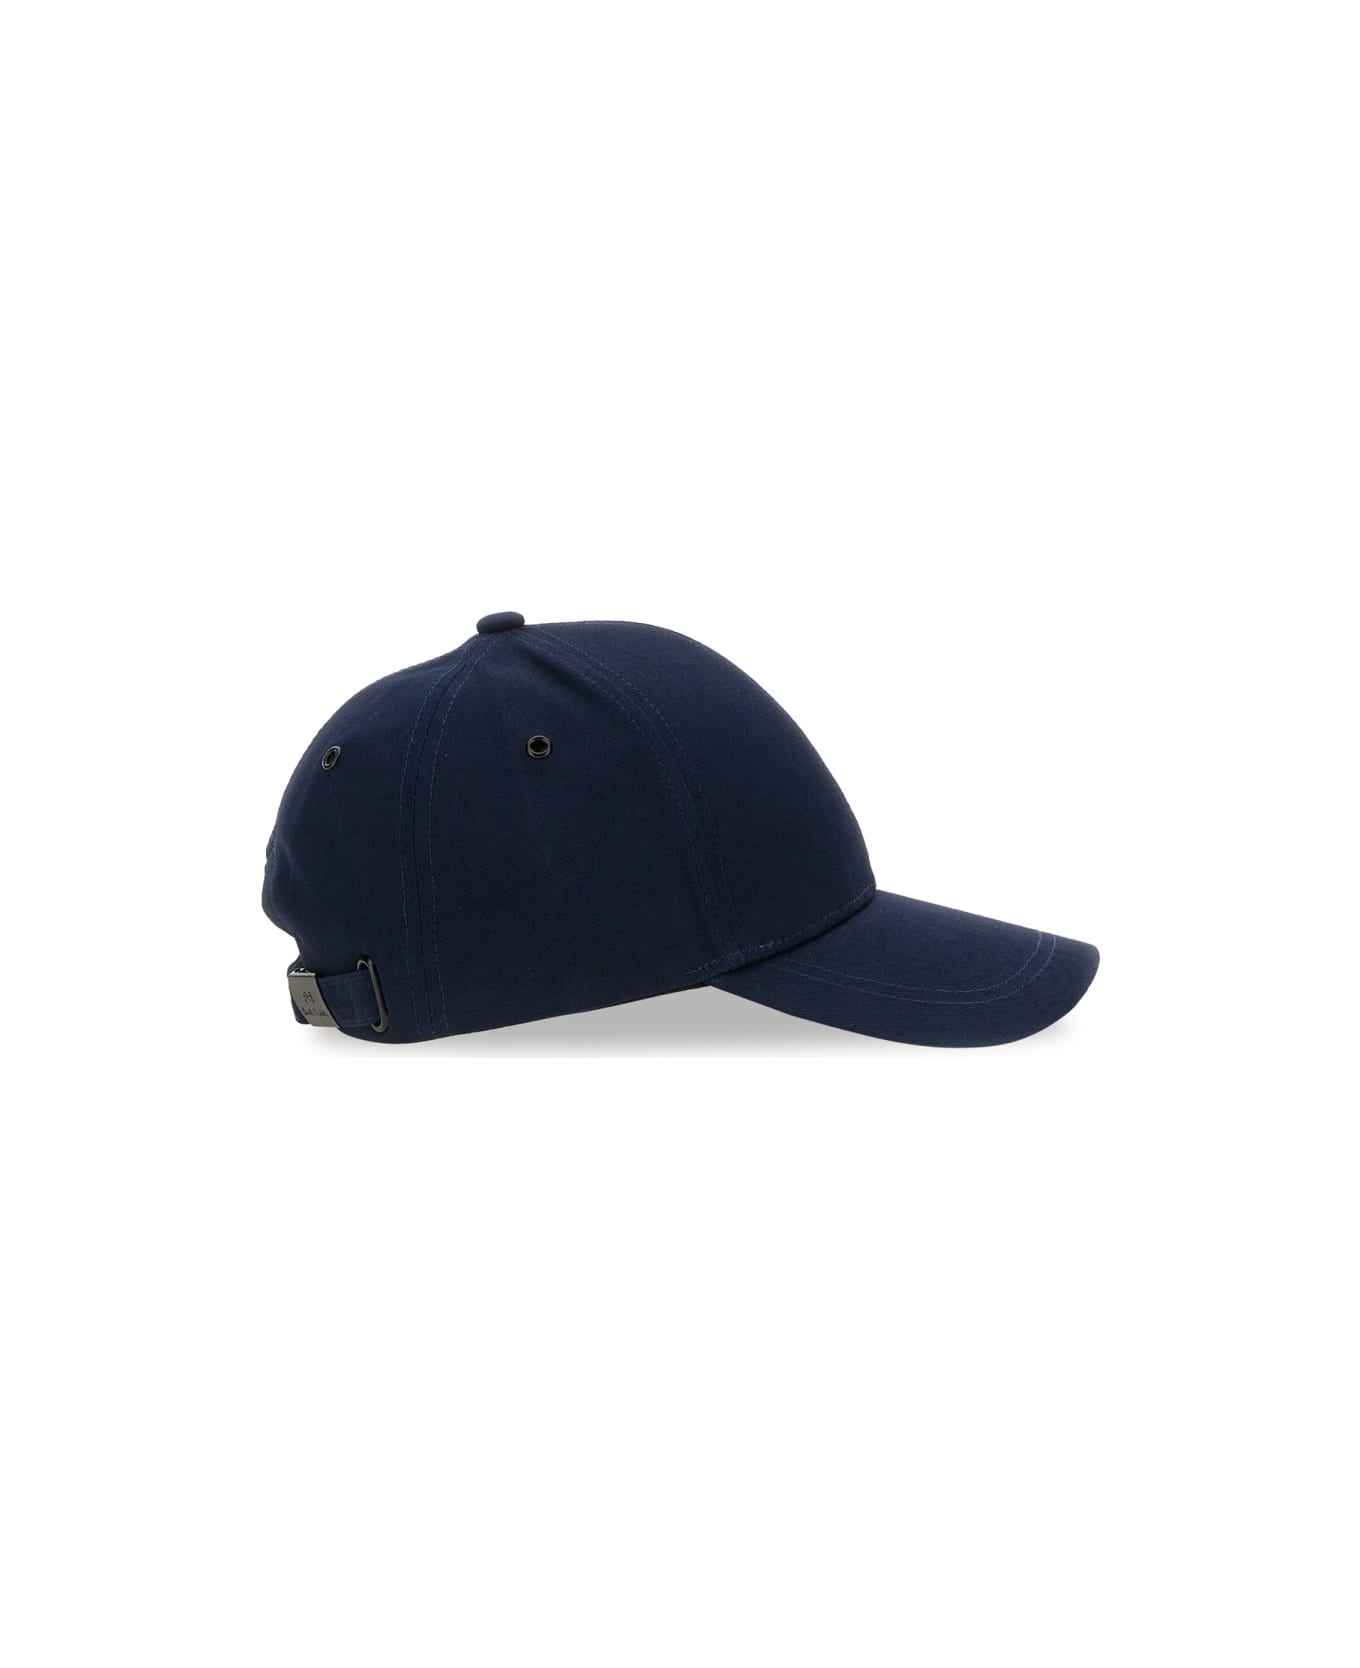 PS by Paul Smith Baseball Cap With "zebra" Logo - BLUE 帽子